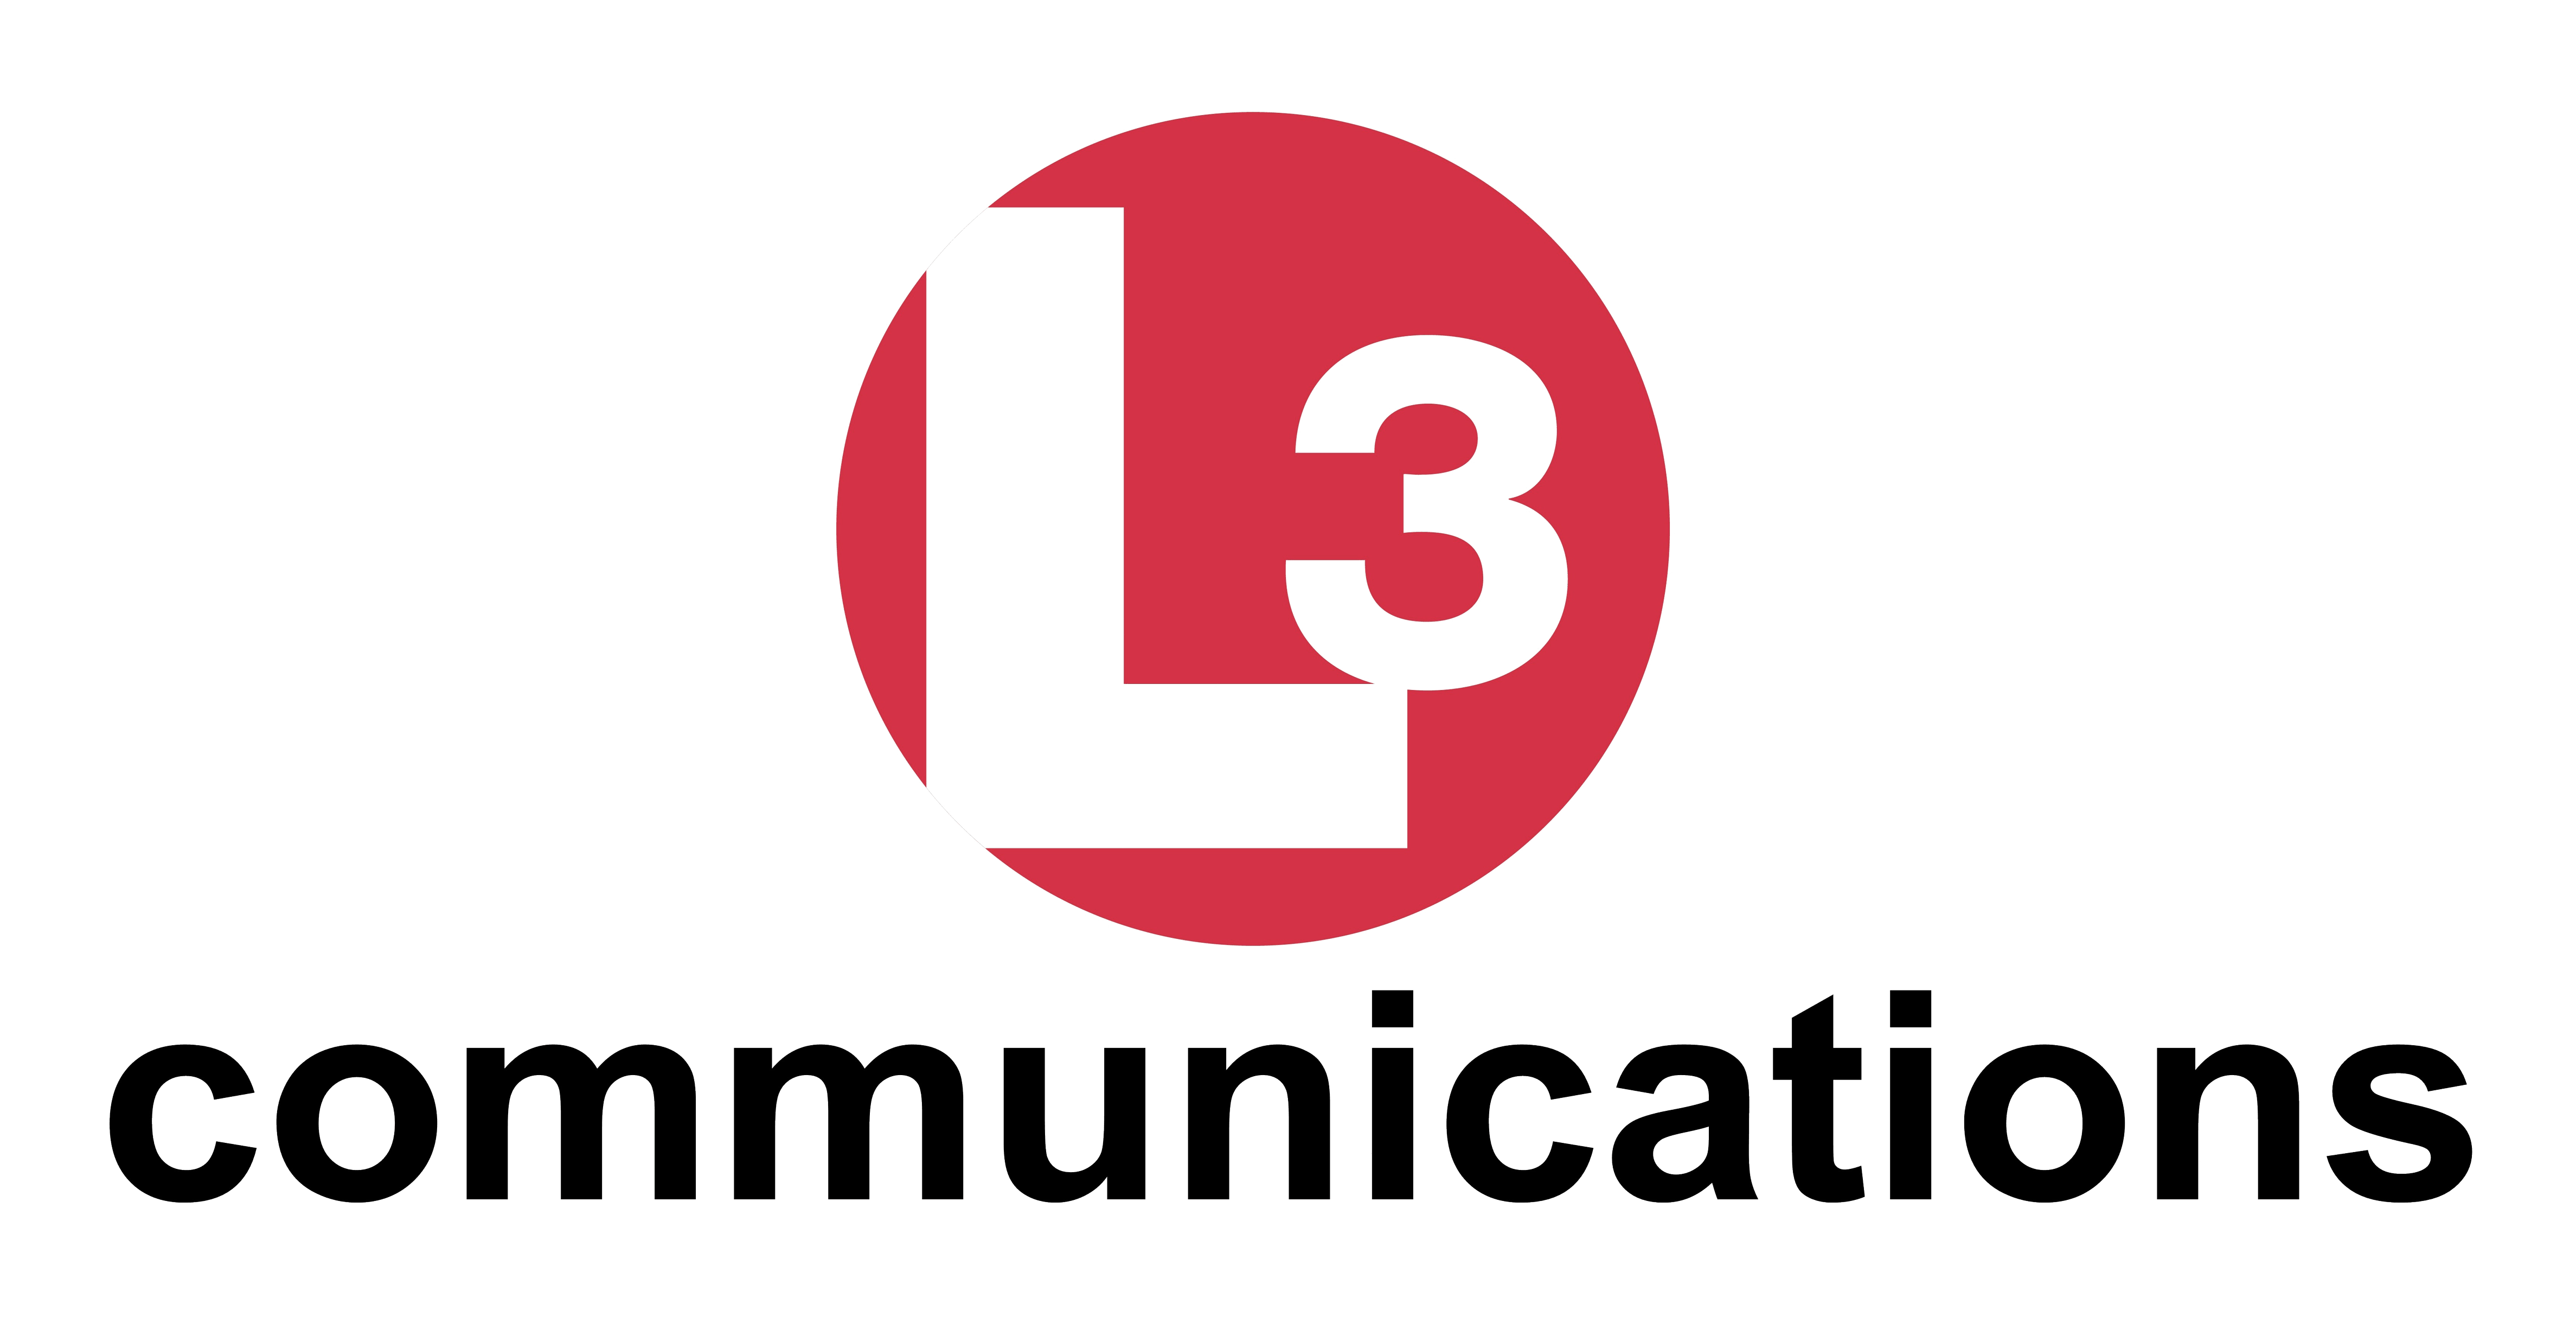 L-3 Communications Logo - L 3 Communications Logo PNG Image. Free transparent CC0